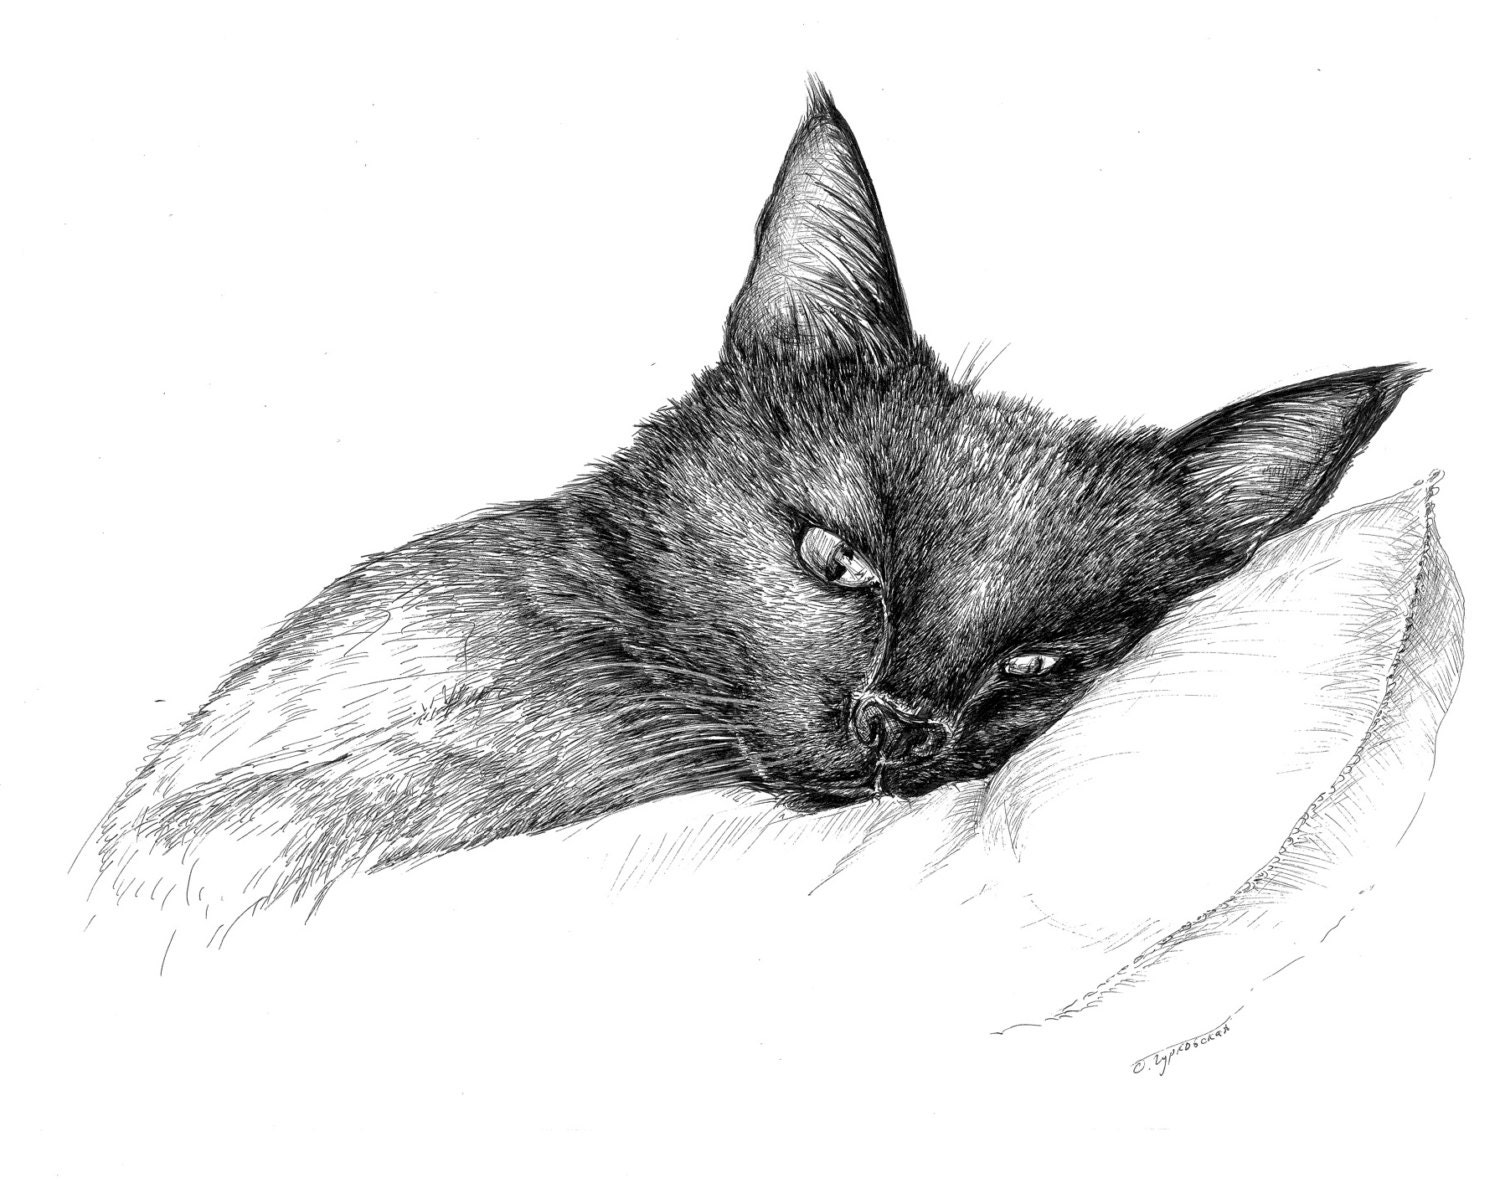 Black cat drawing pen and ink sketch original by KrazyKatLady2015